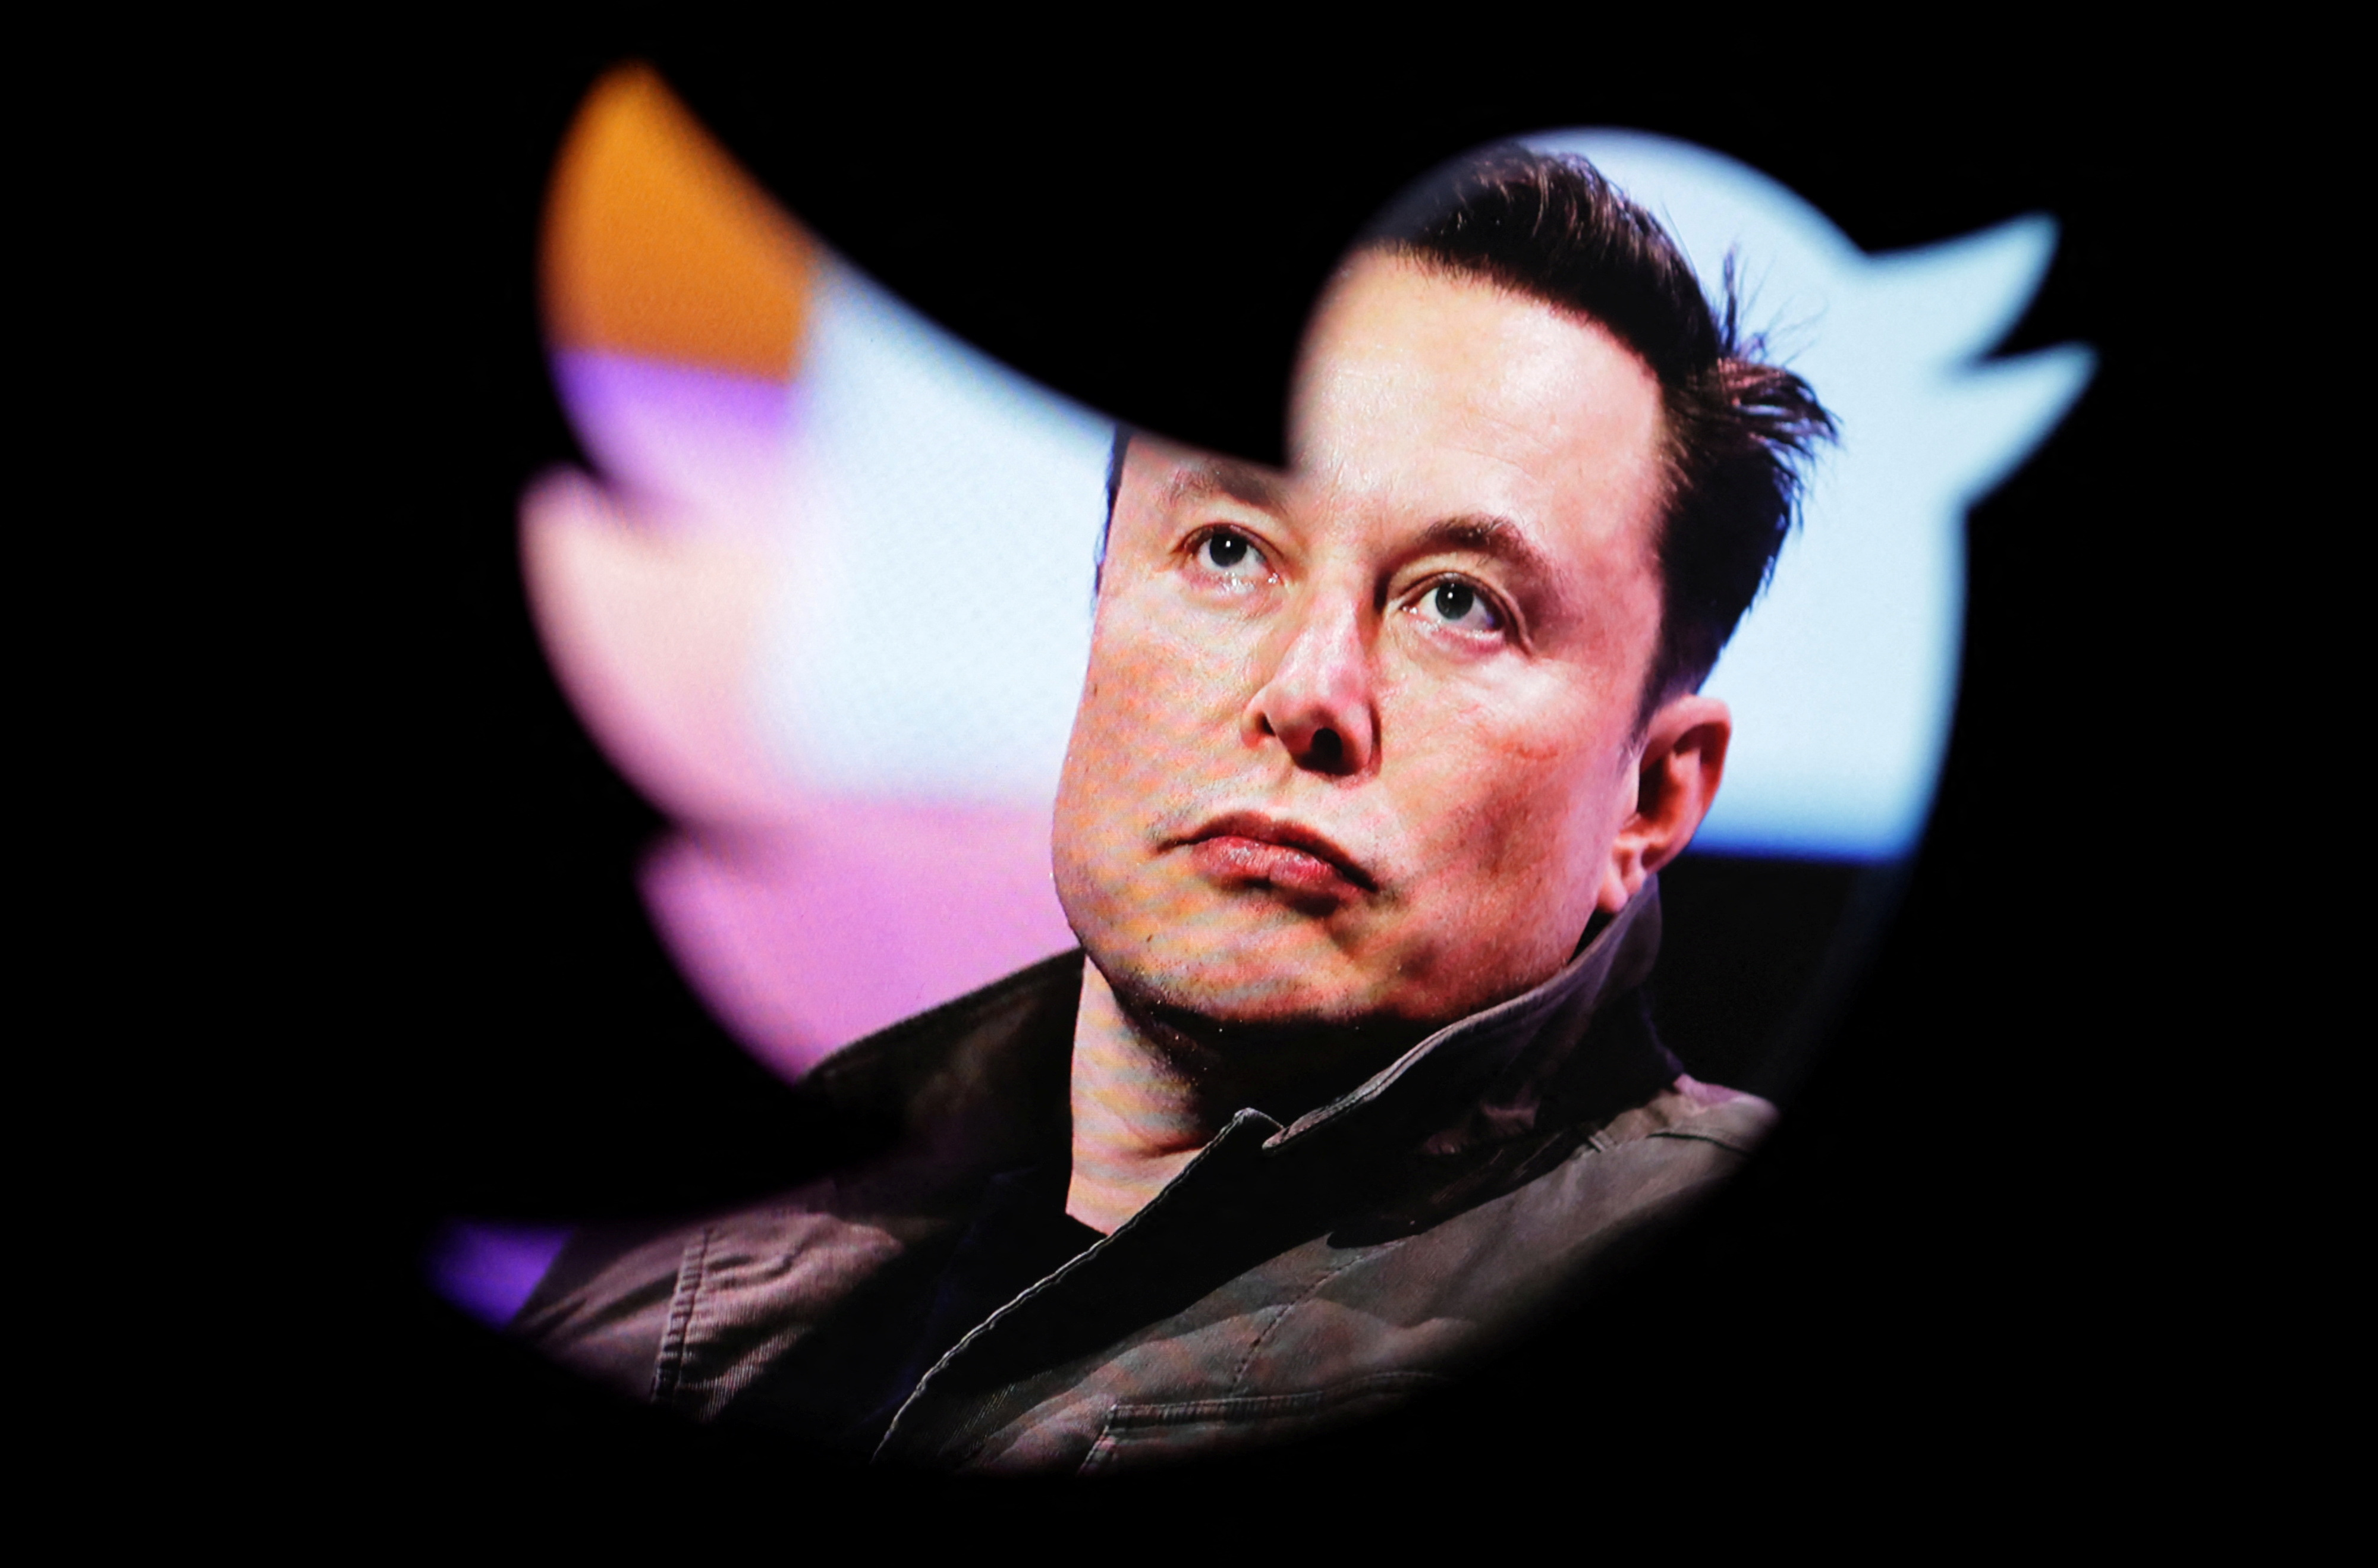 Elon Musk's photo and Twitter logo